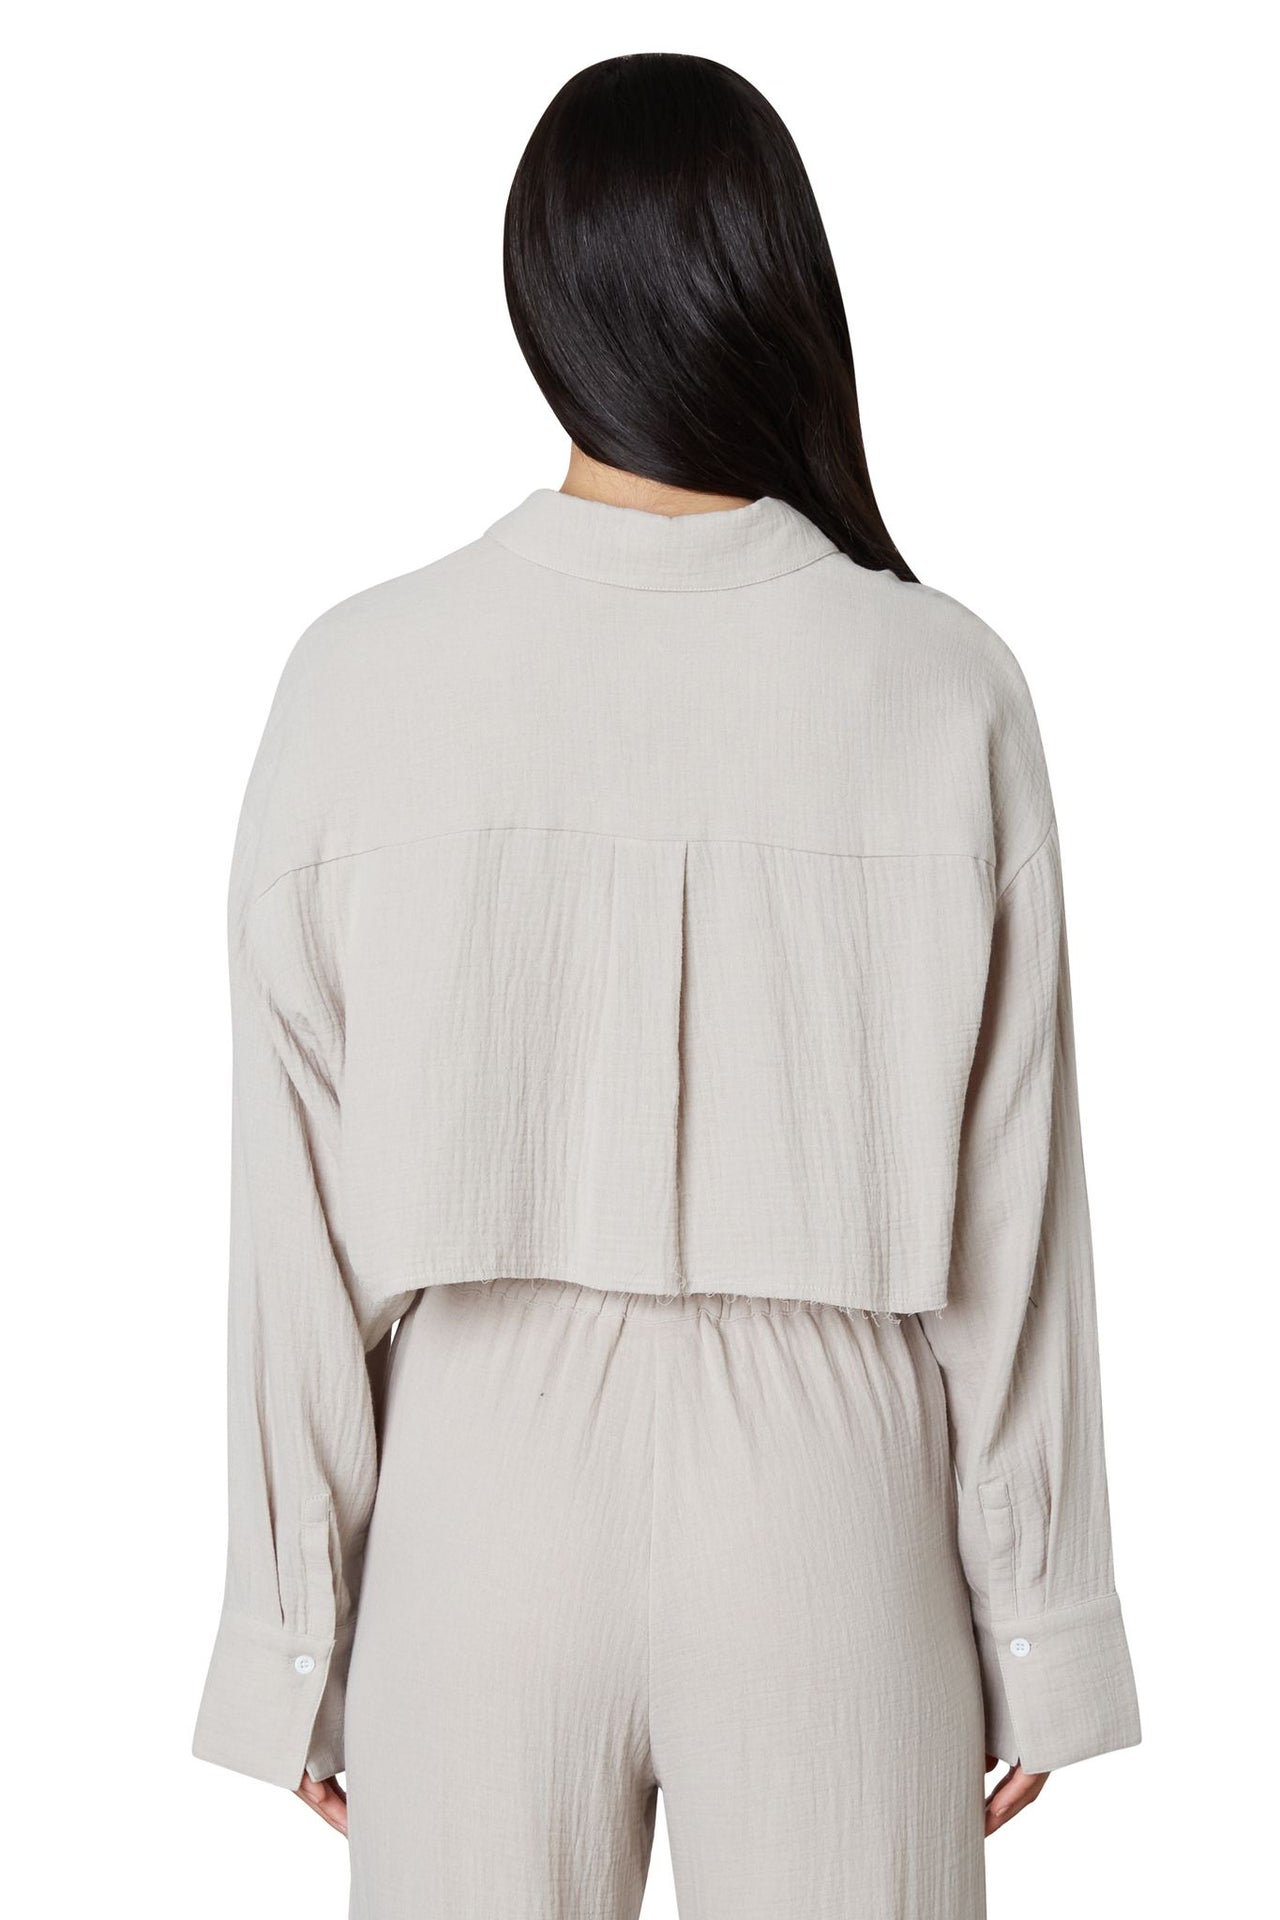 Austin Tan Long Sleeve Shirt, Short Tee by NIA | LIT Boutique